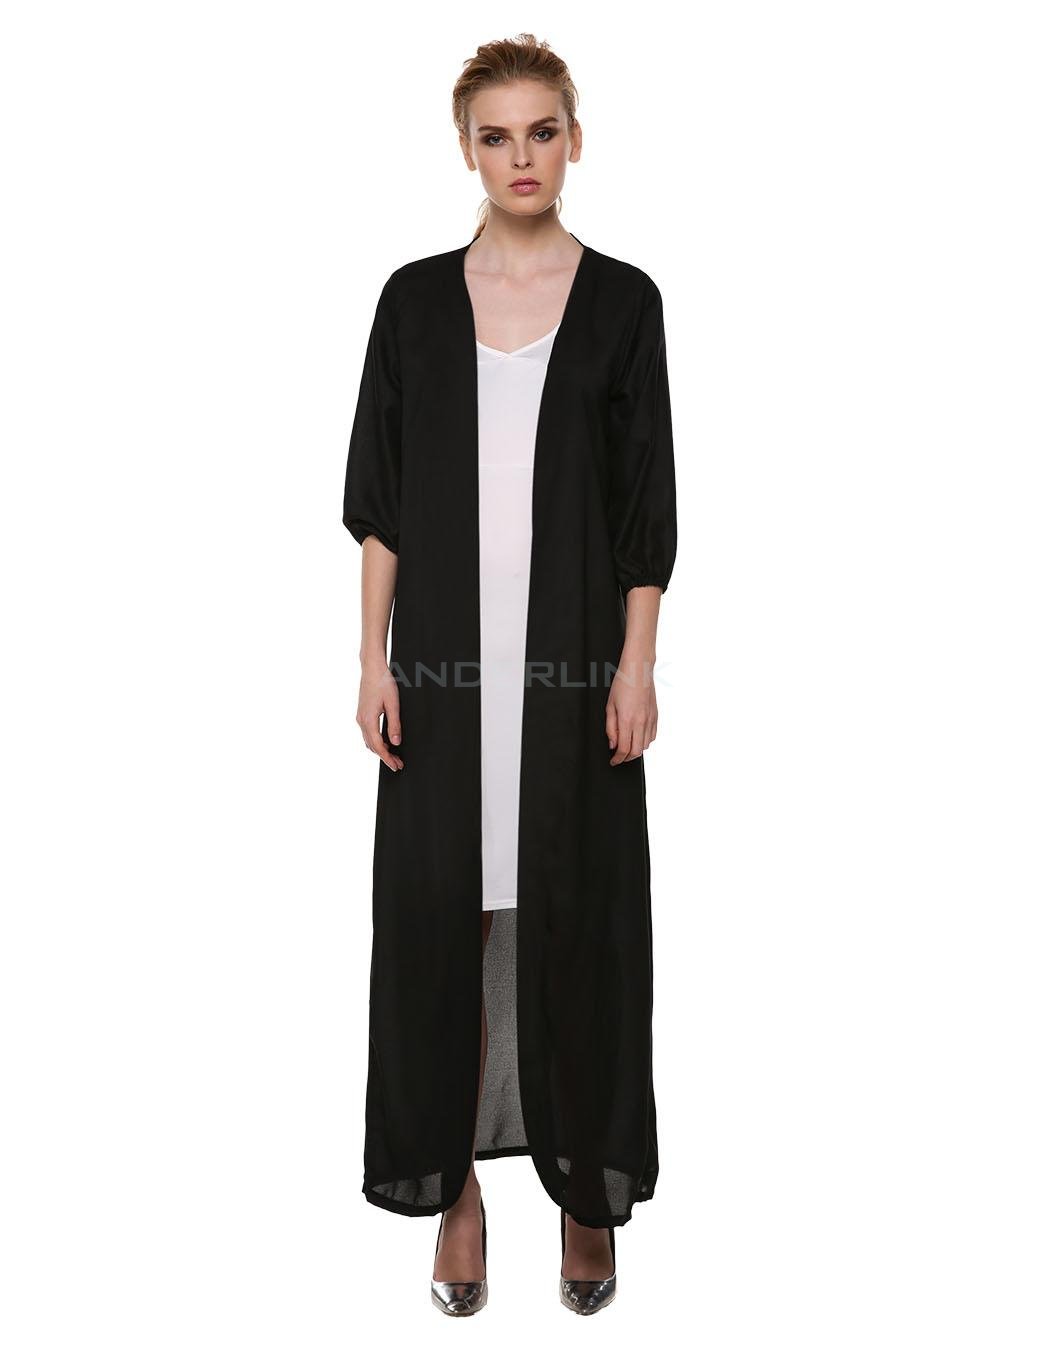 unknown New Women's Ladies Sexy Style Long Fall 3/4 Sleeve Long Girl's Black Kimono Maxi Dress